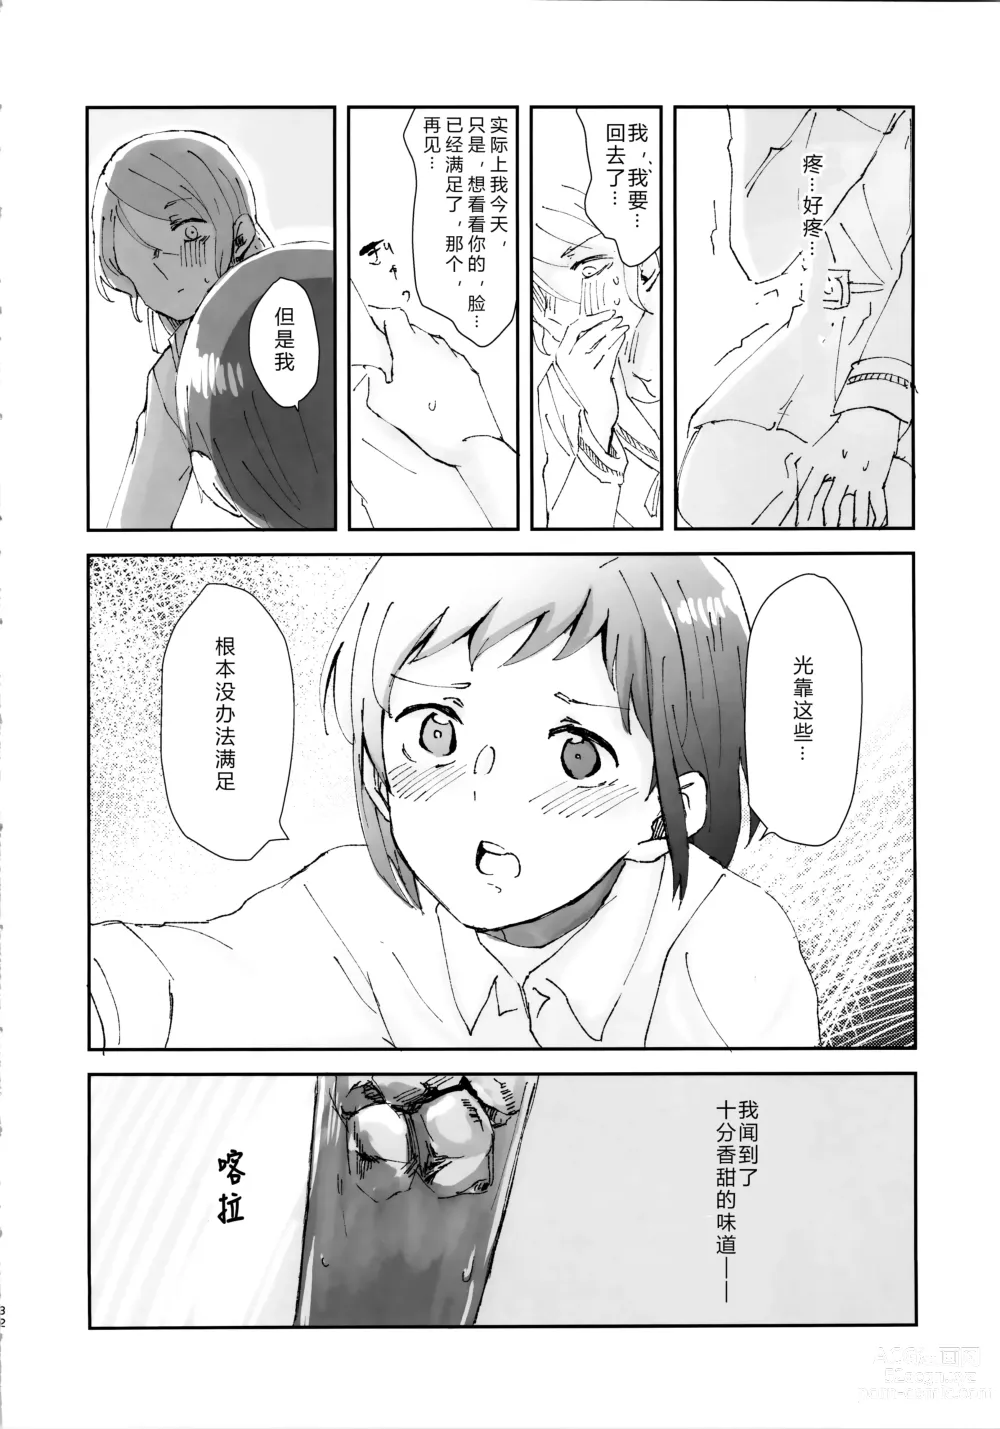 Page 32 of doujinshi 只要爱着彼此就好